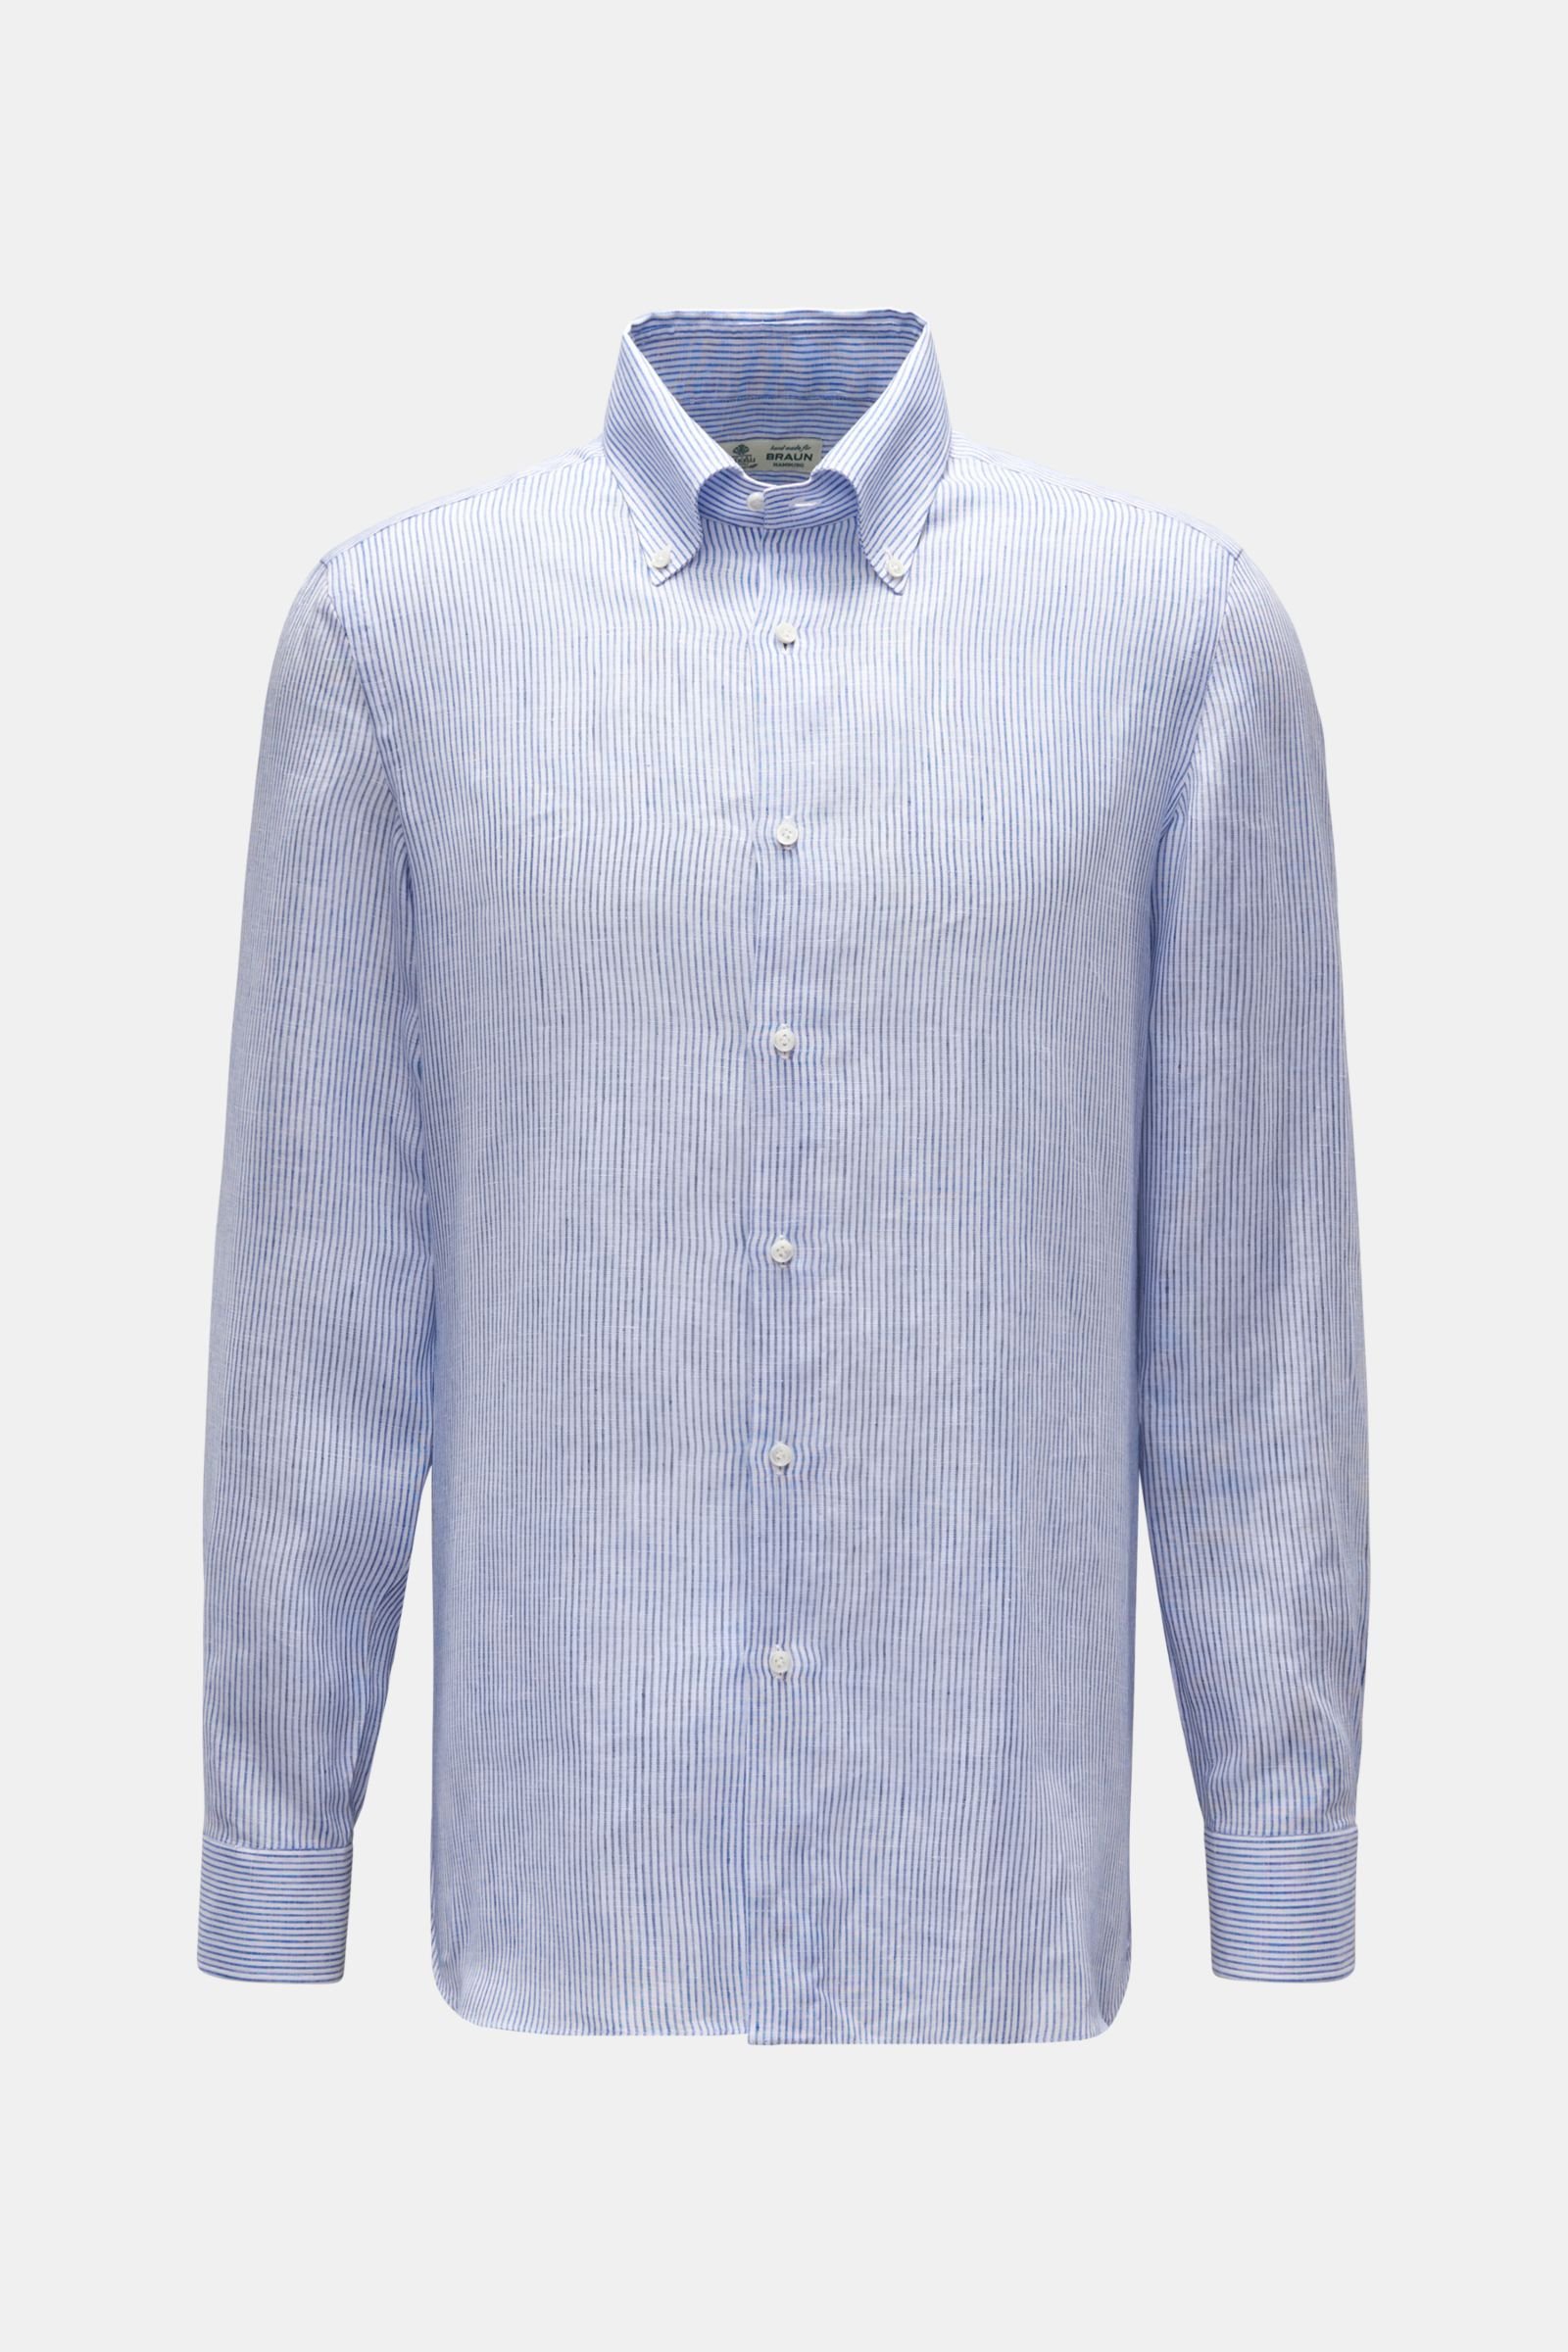 Linen shirt 'Gable' button-down collar blue/white striped